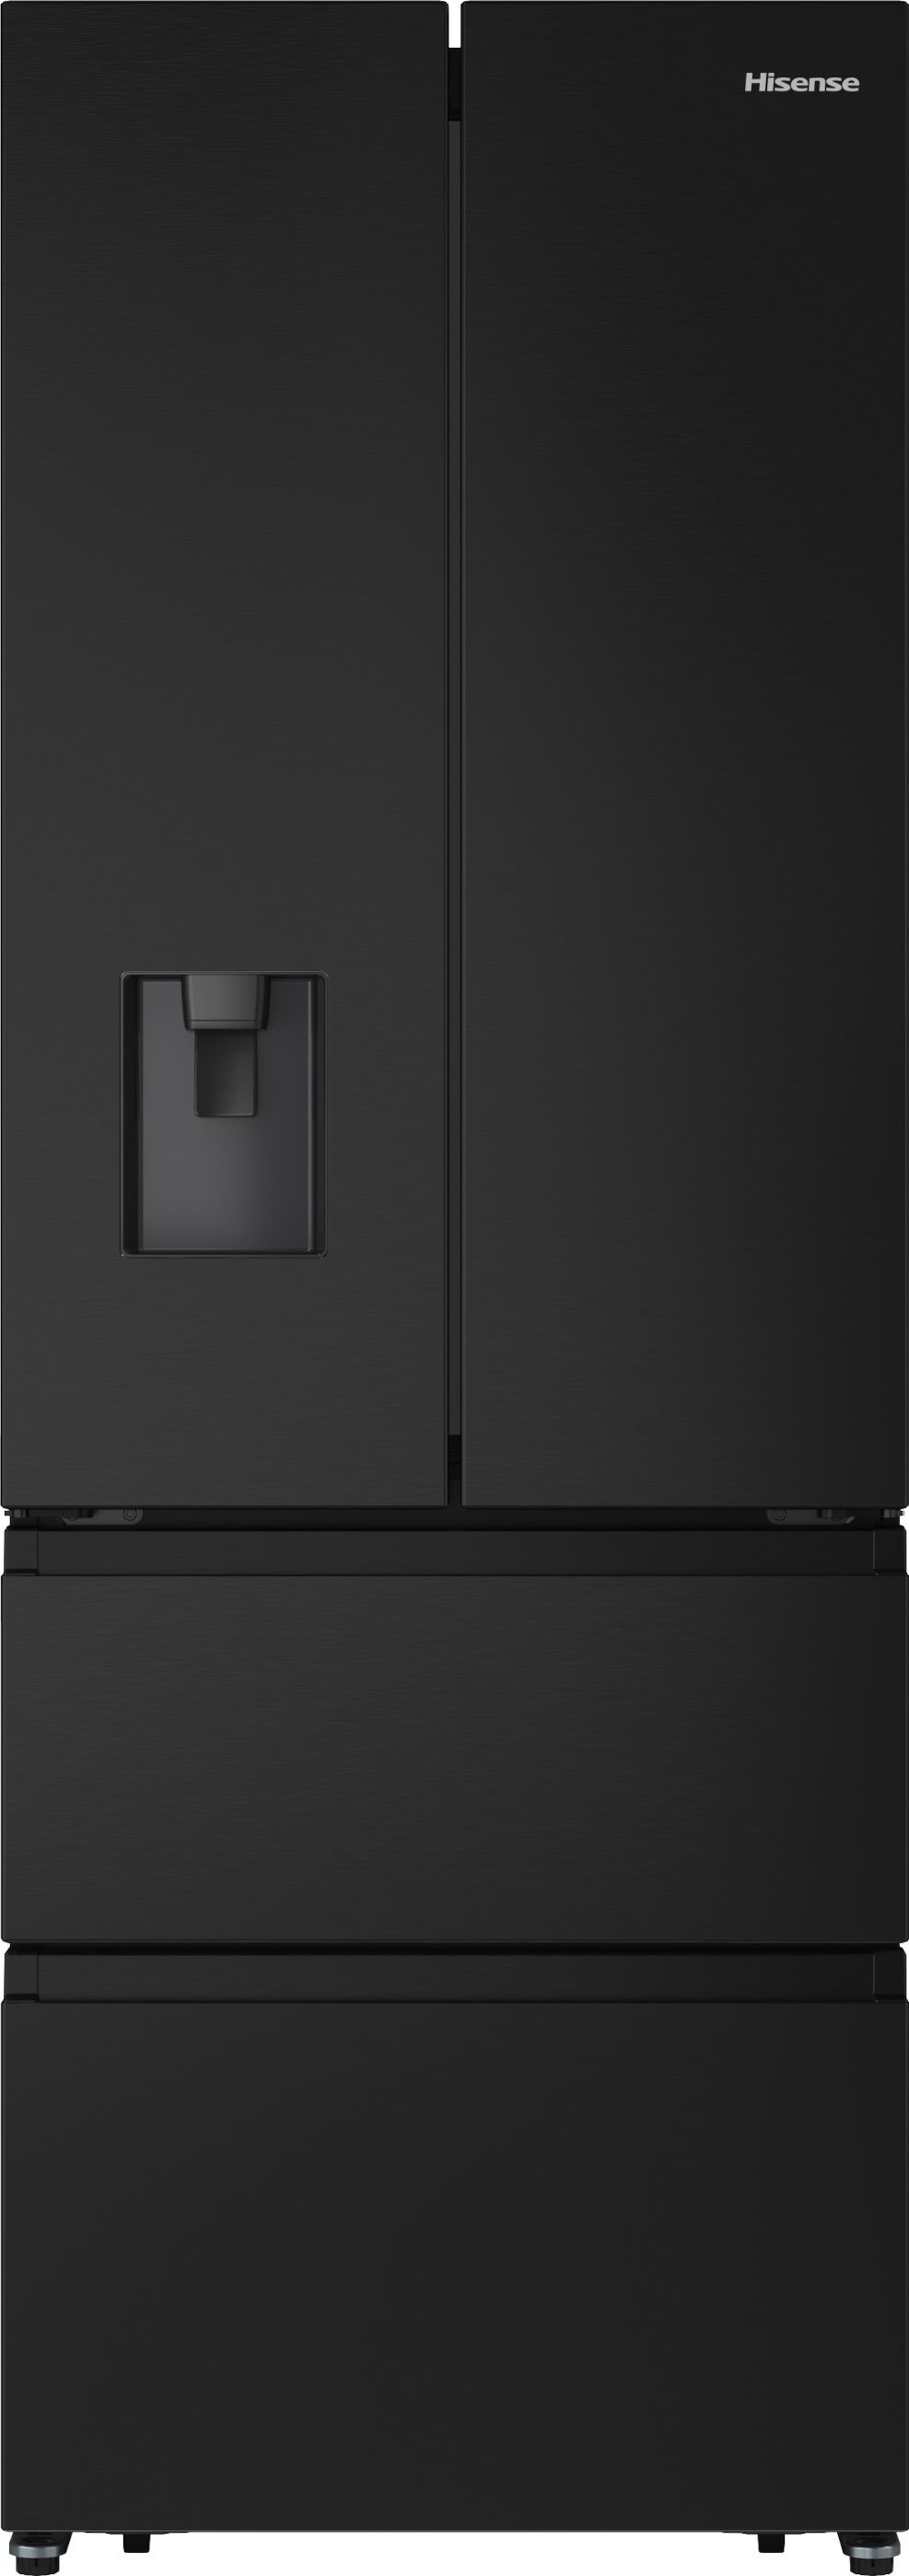 Hisense PureFlat RF632N4WFE Non-Plumbed Total No Frost American Fridge Freezer - Black / Stainless Steel - E Rated, Black